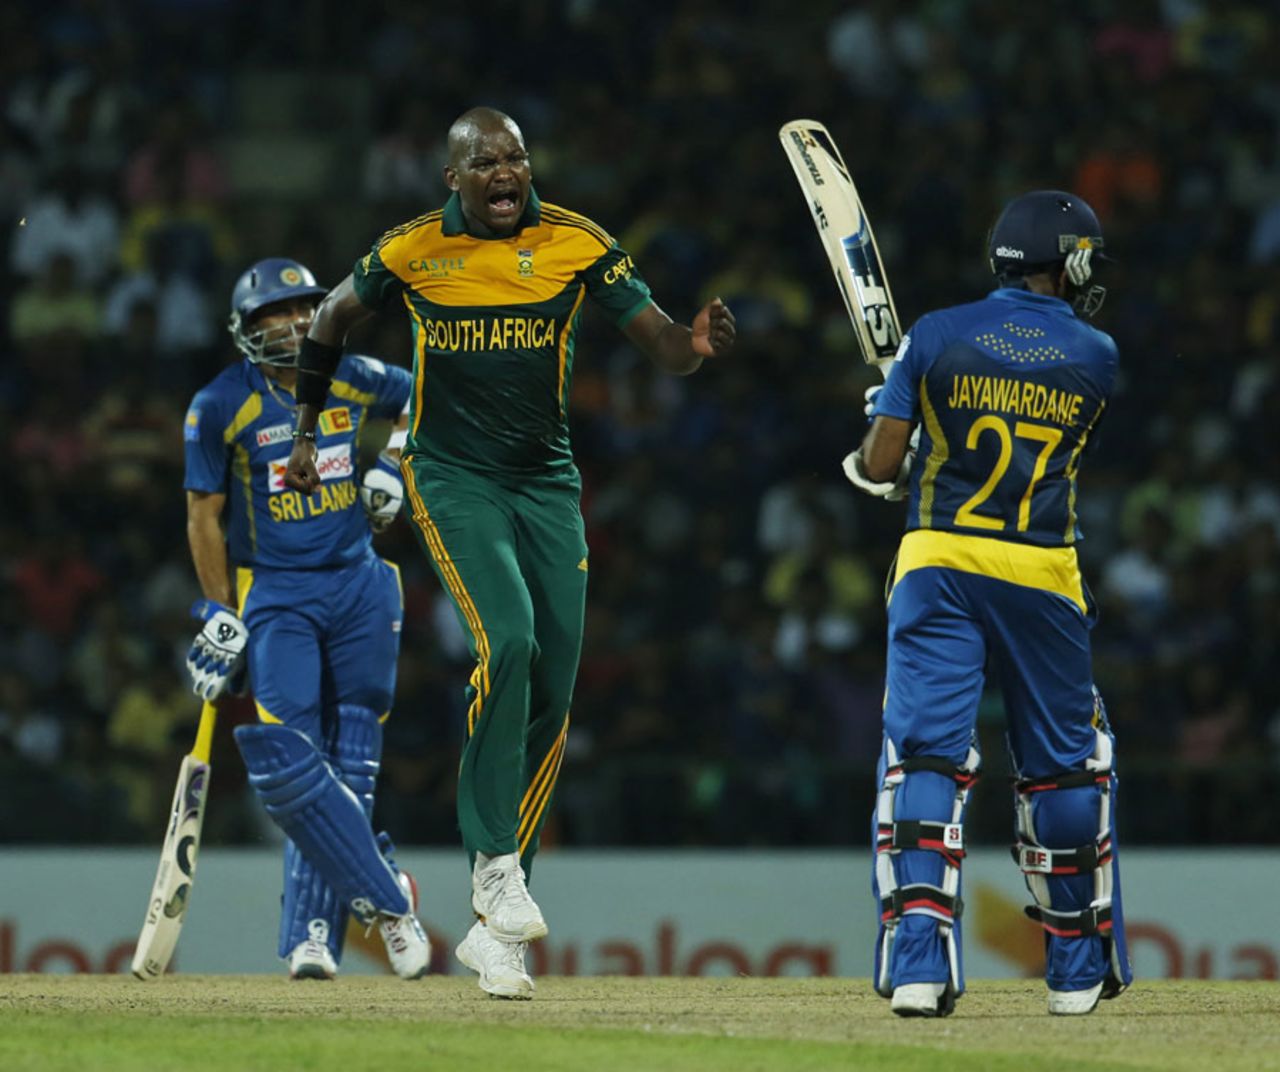 Lonwabo Tsotsobe celebrates dismissing Mahela Jayawardene, Sri Lanka v South Africa, 4th ODI, Pallekele, July 28, 2013